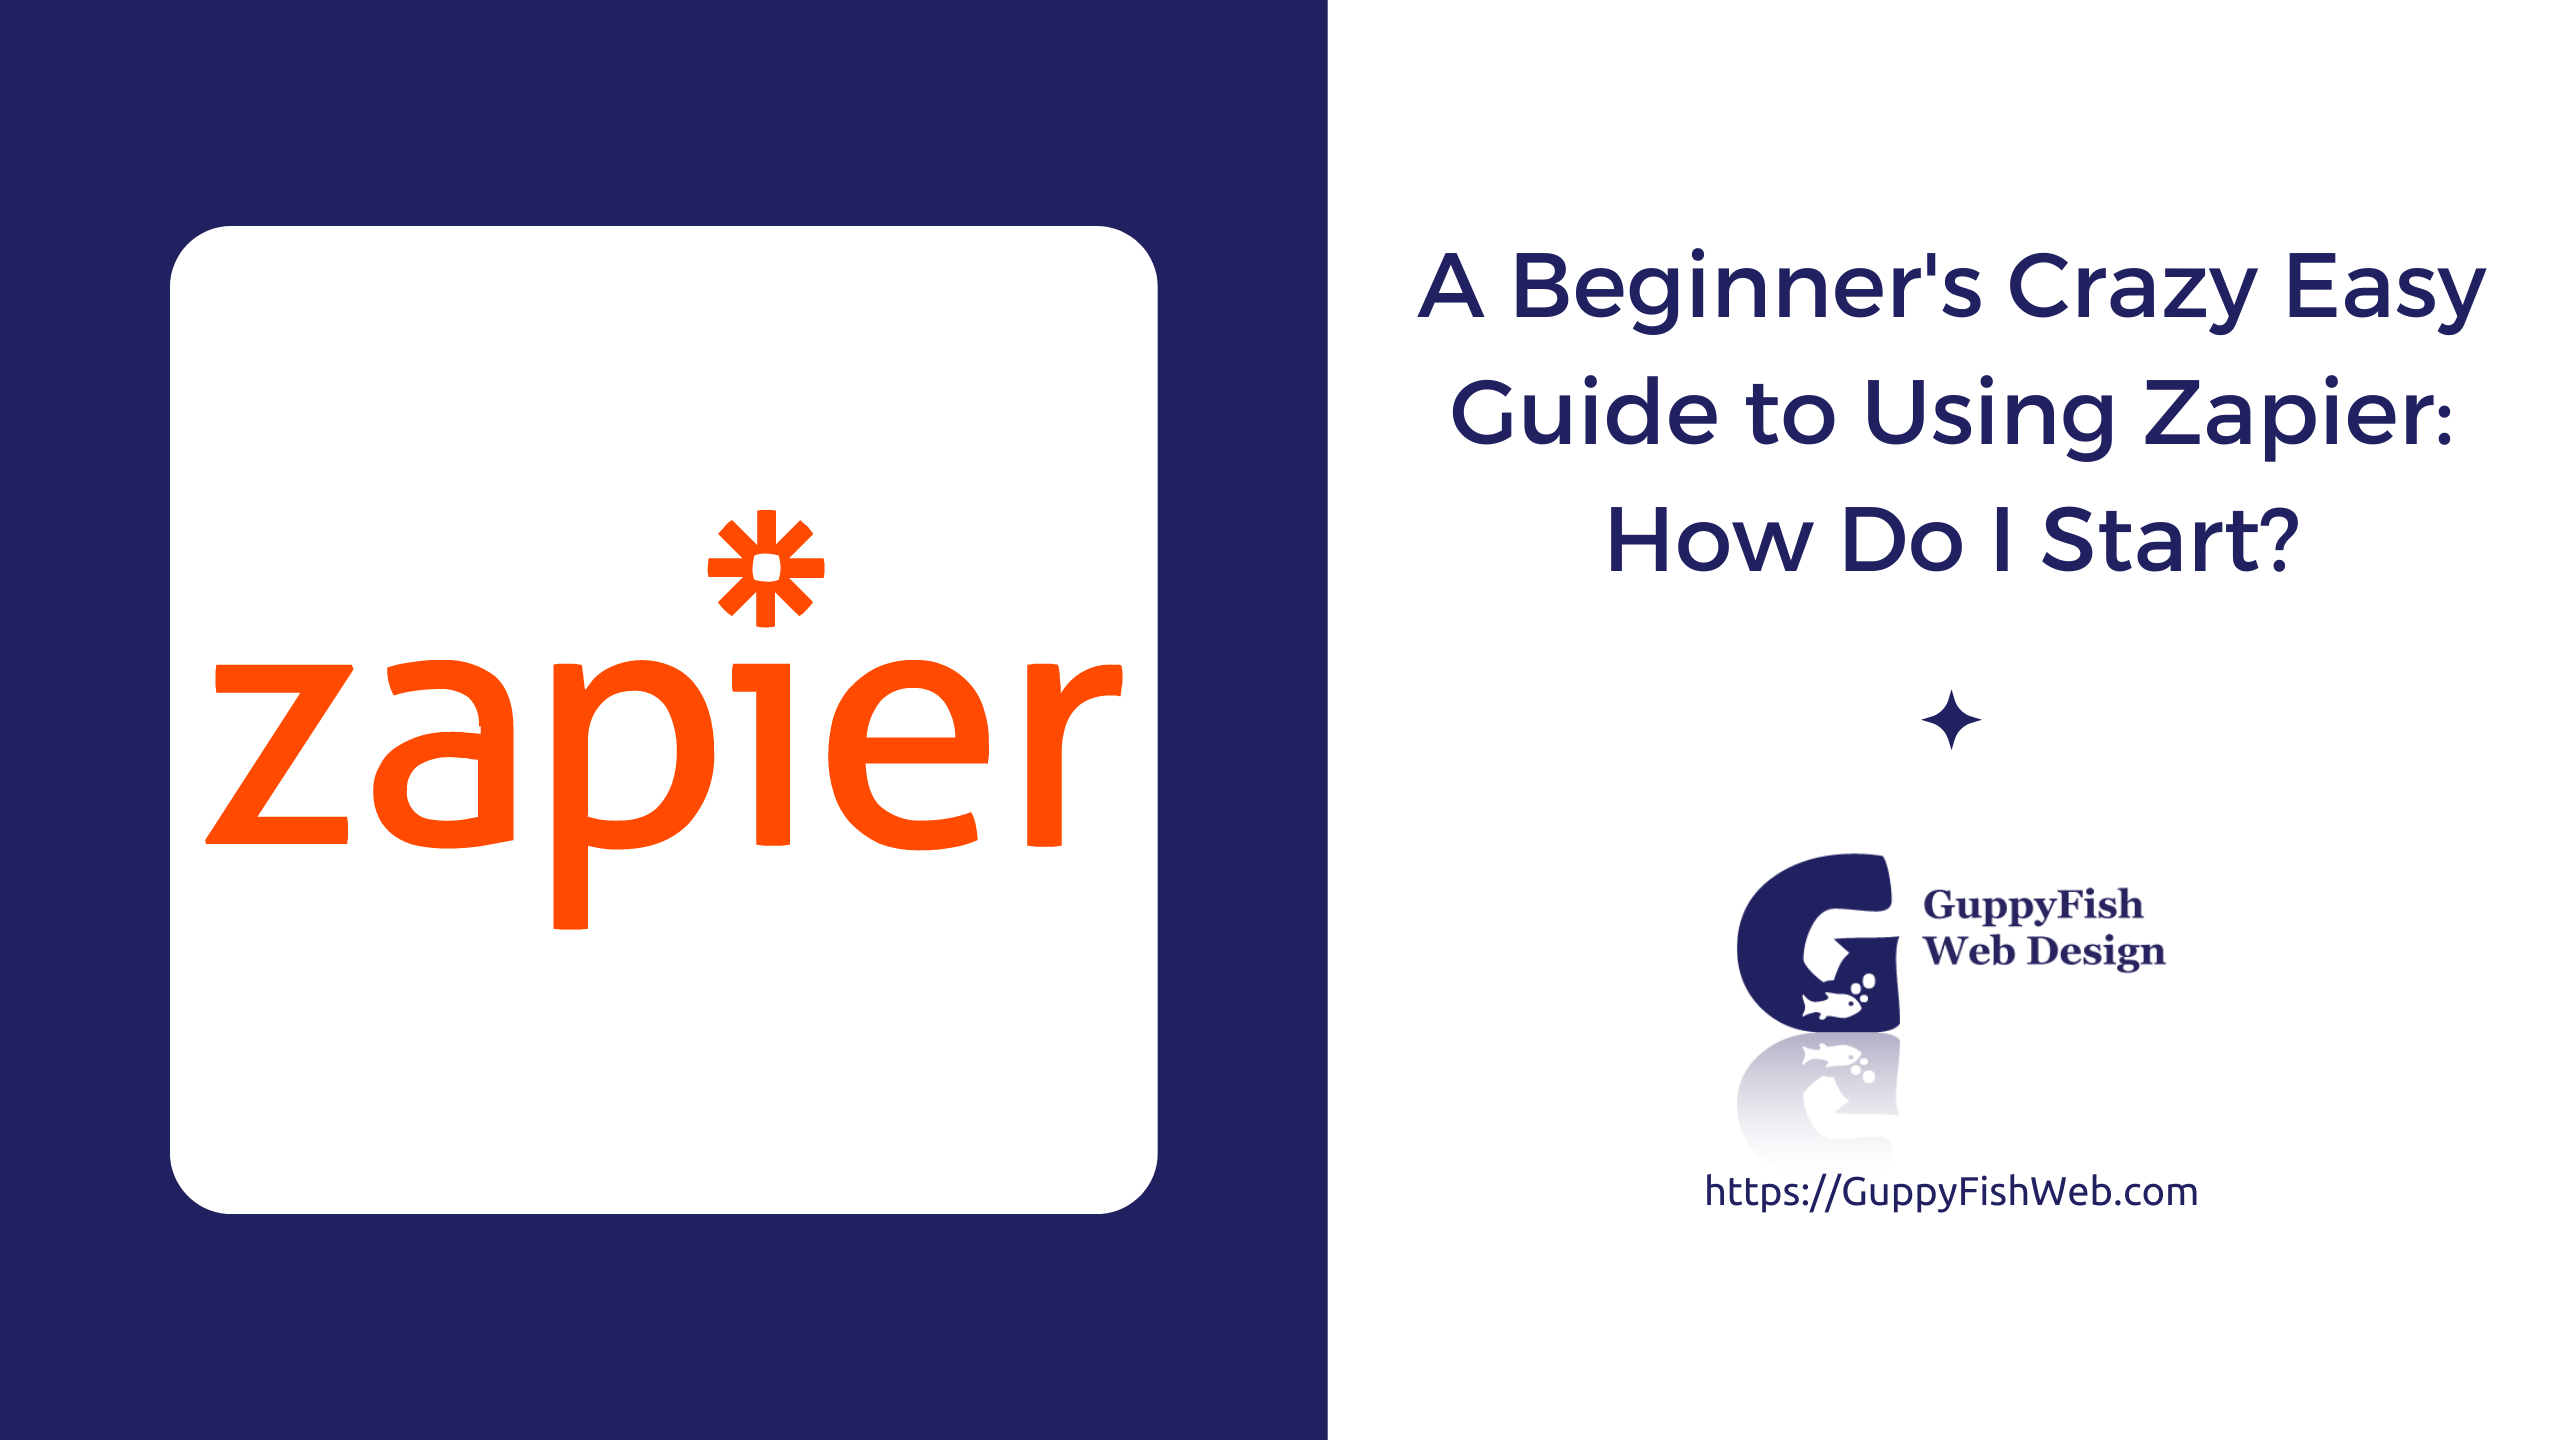 A Beginner's Crazy Easy Guide to Using Zapier: How Do I Start?